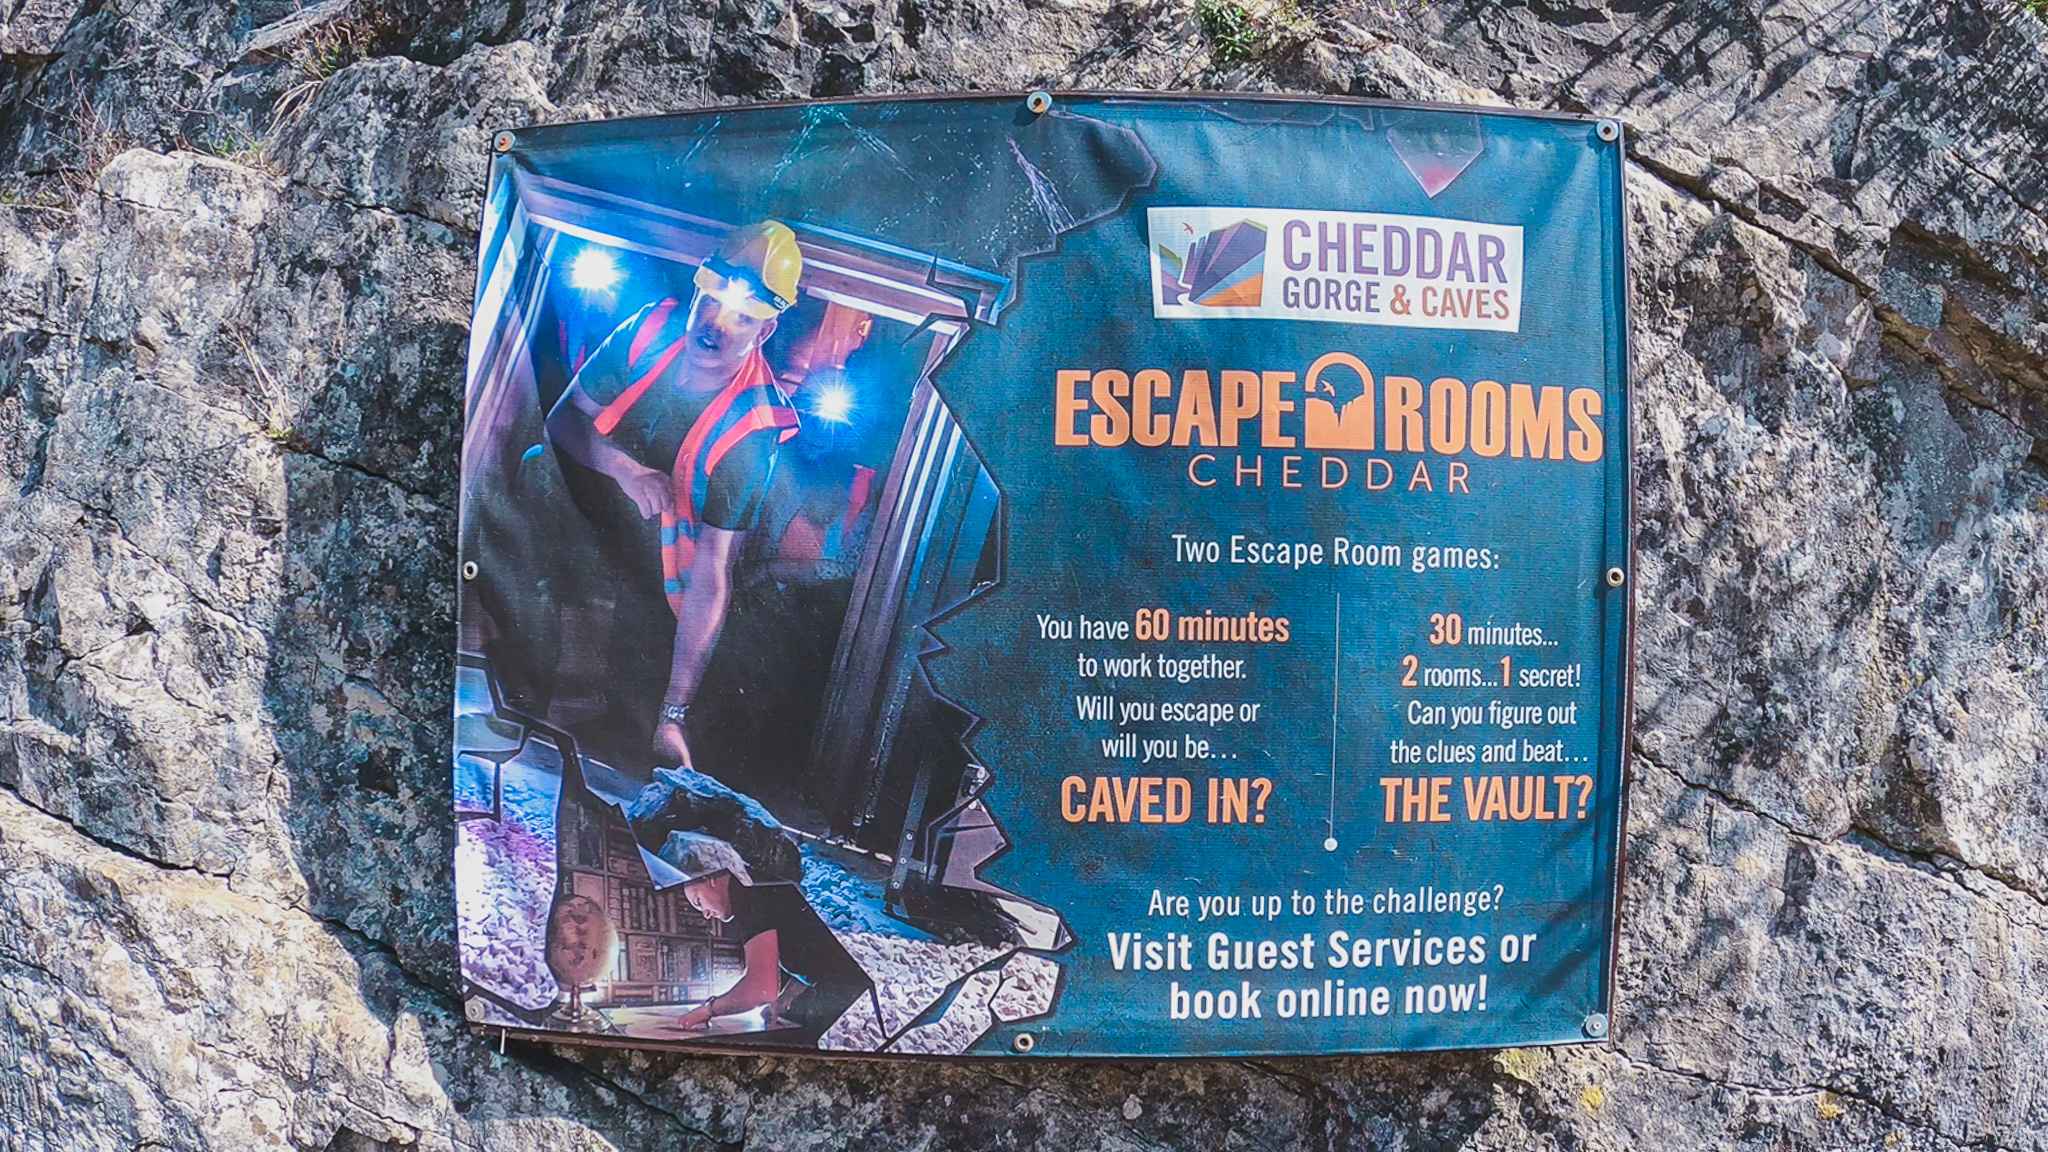 Cheddar Gorge escape rooms